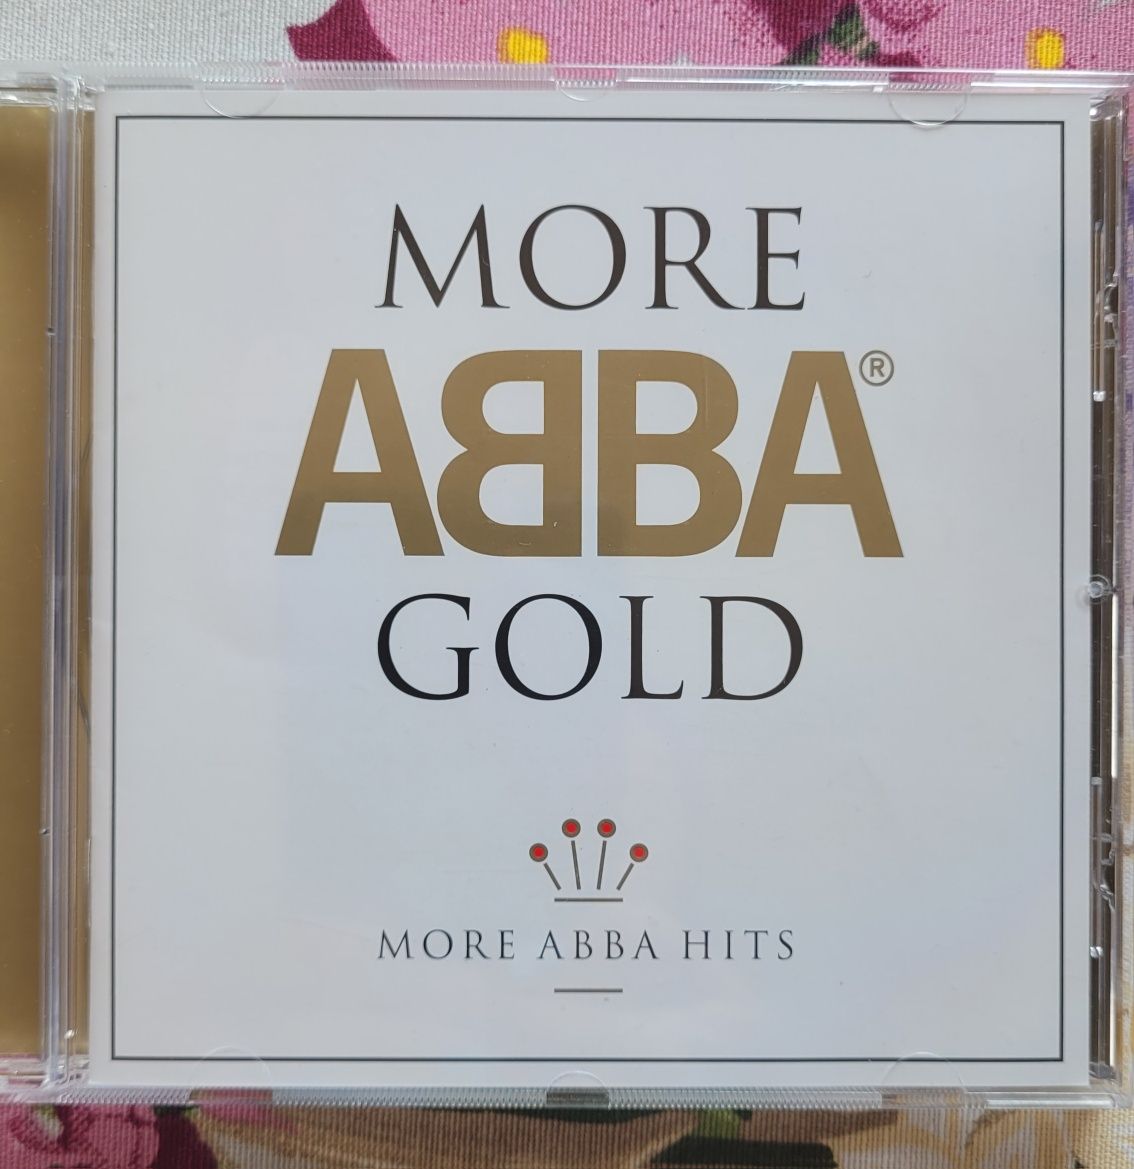 Nowa płyta CD More ABBA GOLD